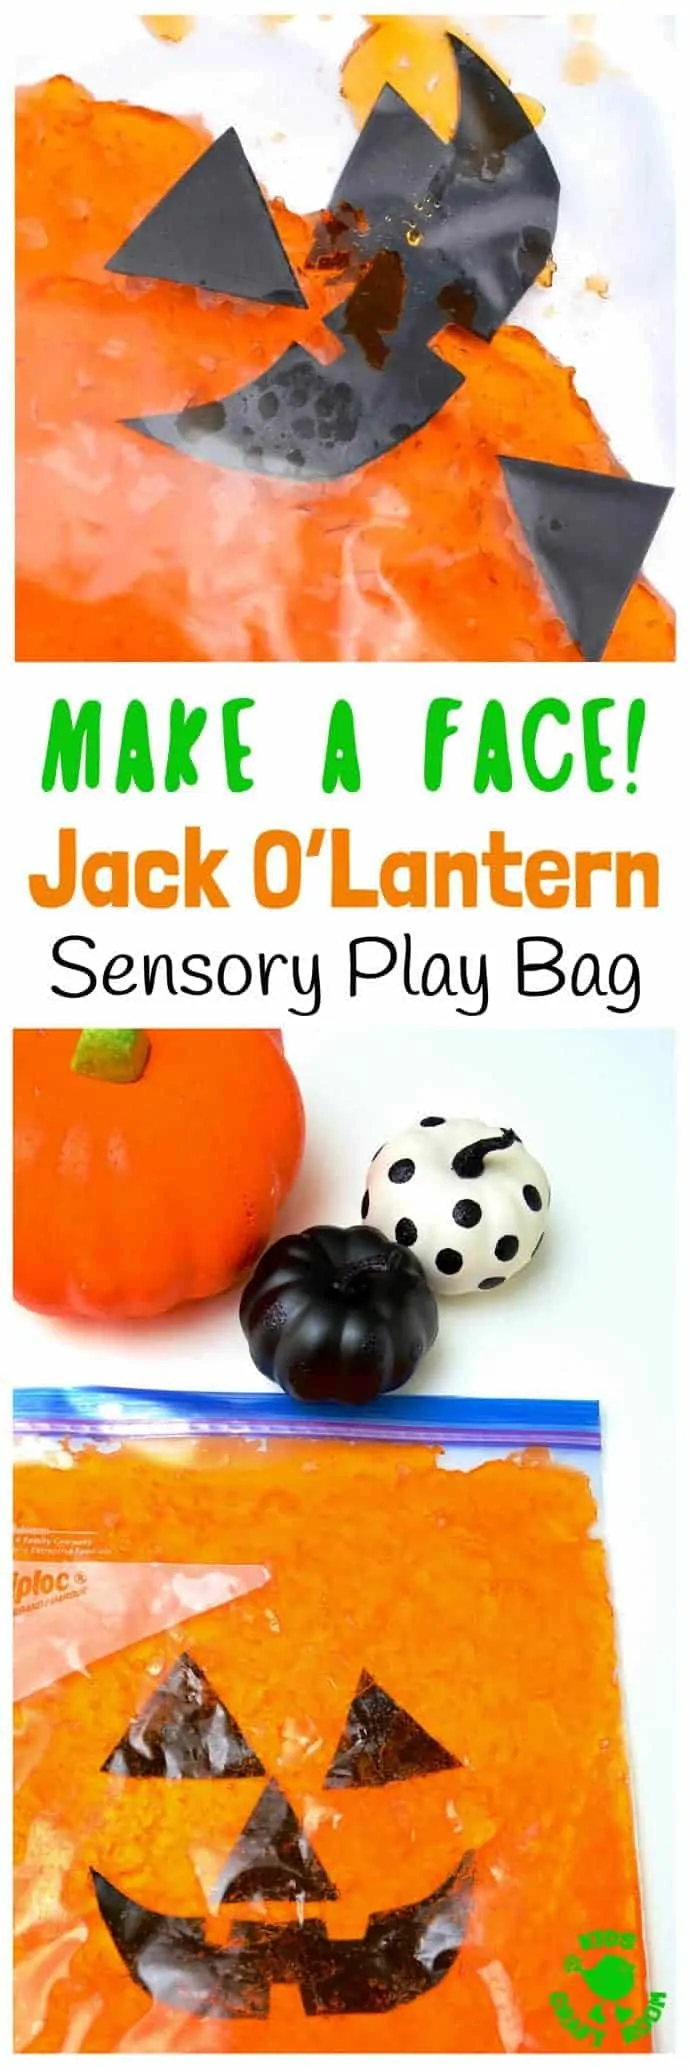 A close up of a Make-A-Face Jack O'Lantern Sensory Play Bag.